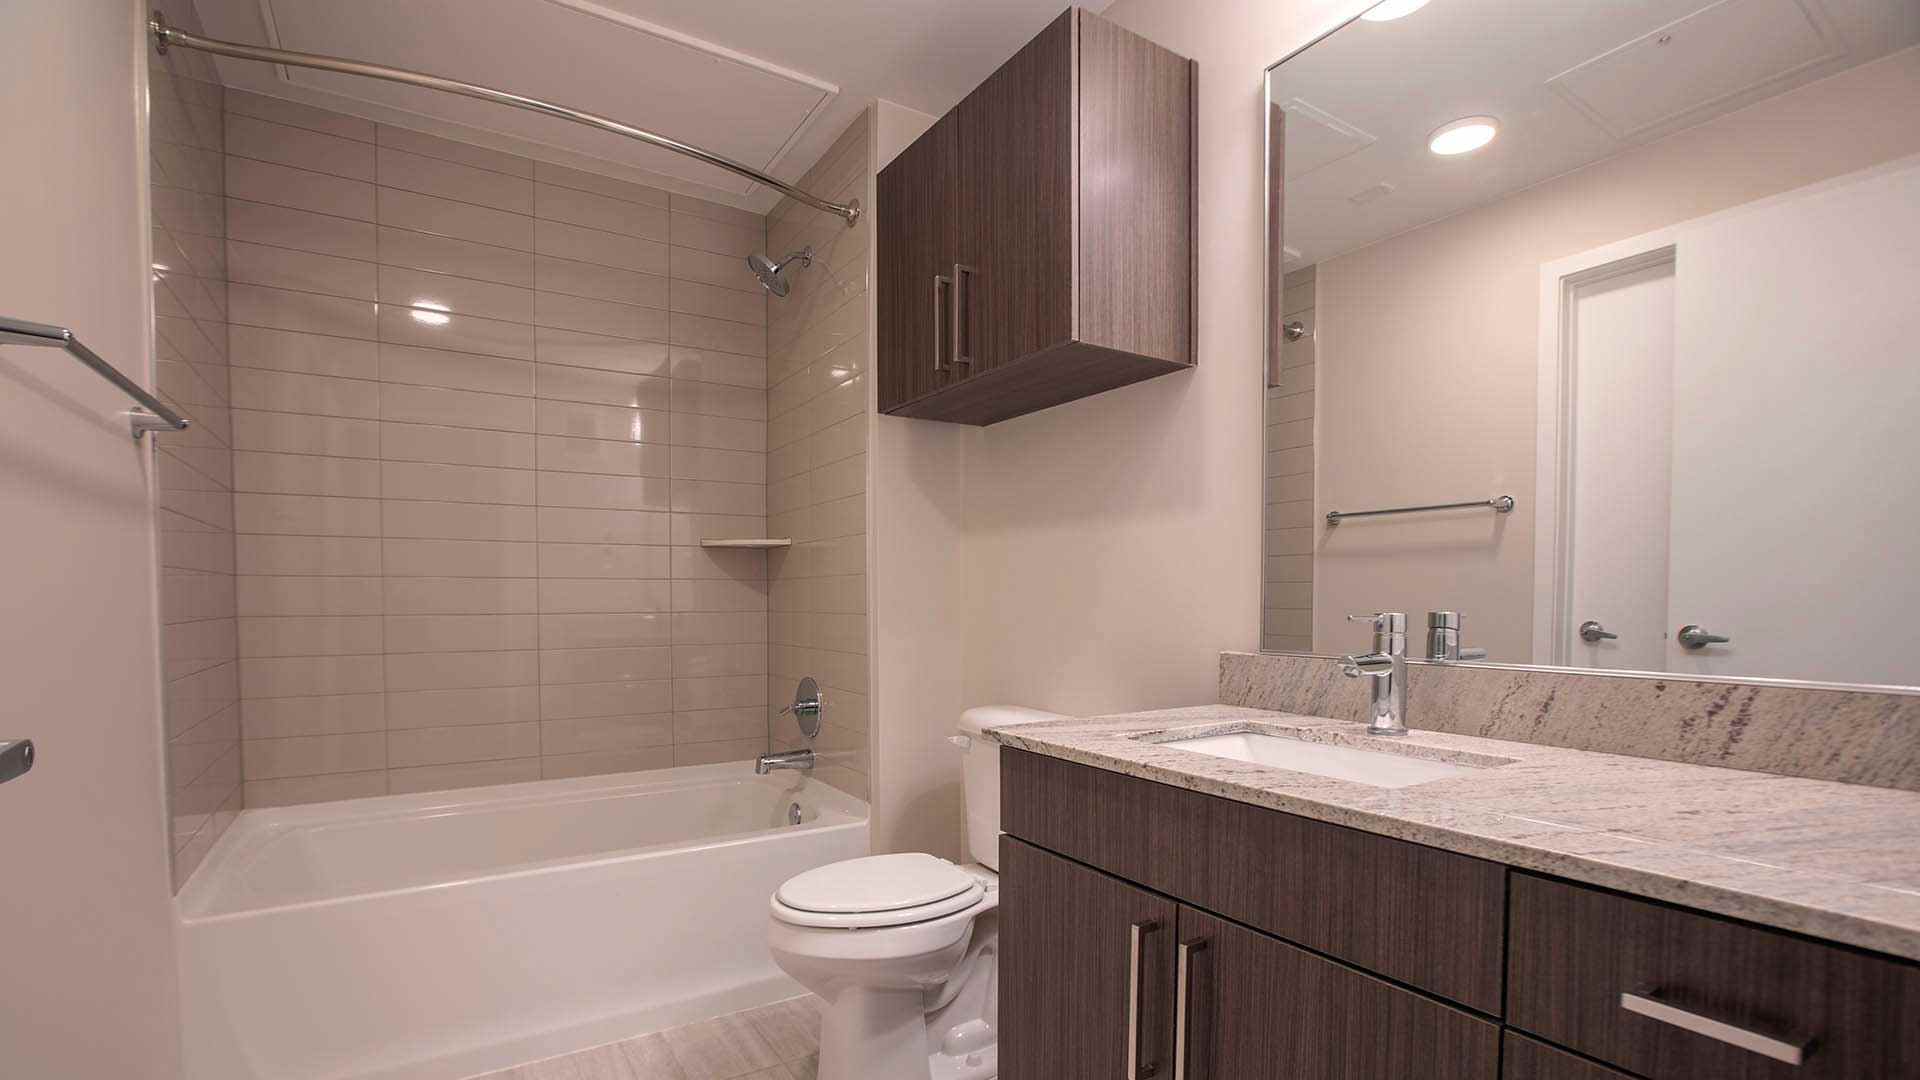 Reve apartments s4 bathroom warm decor view